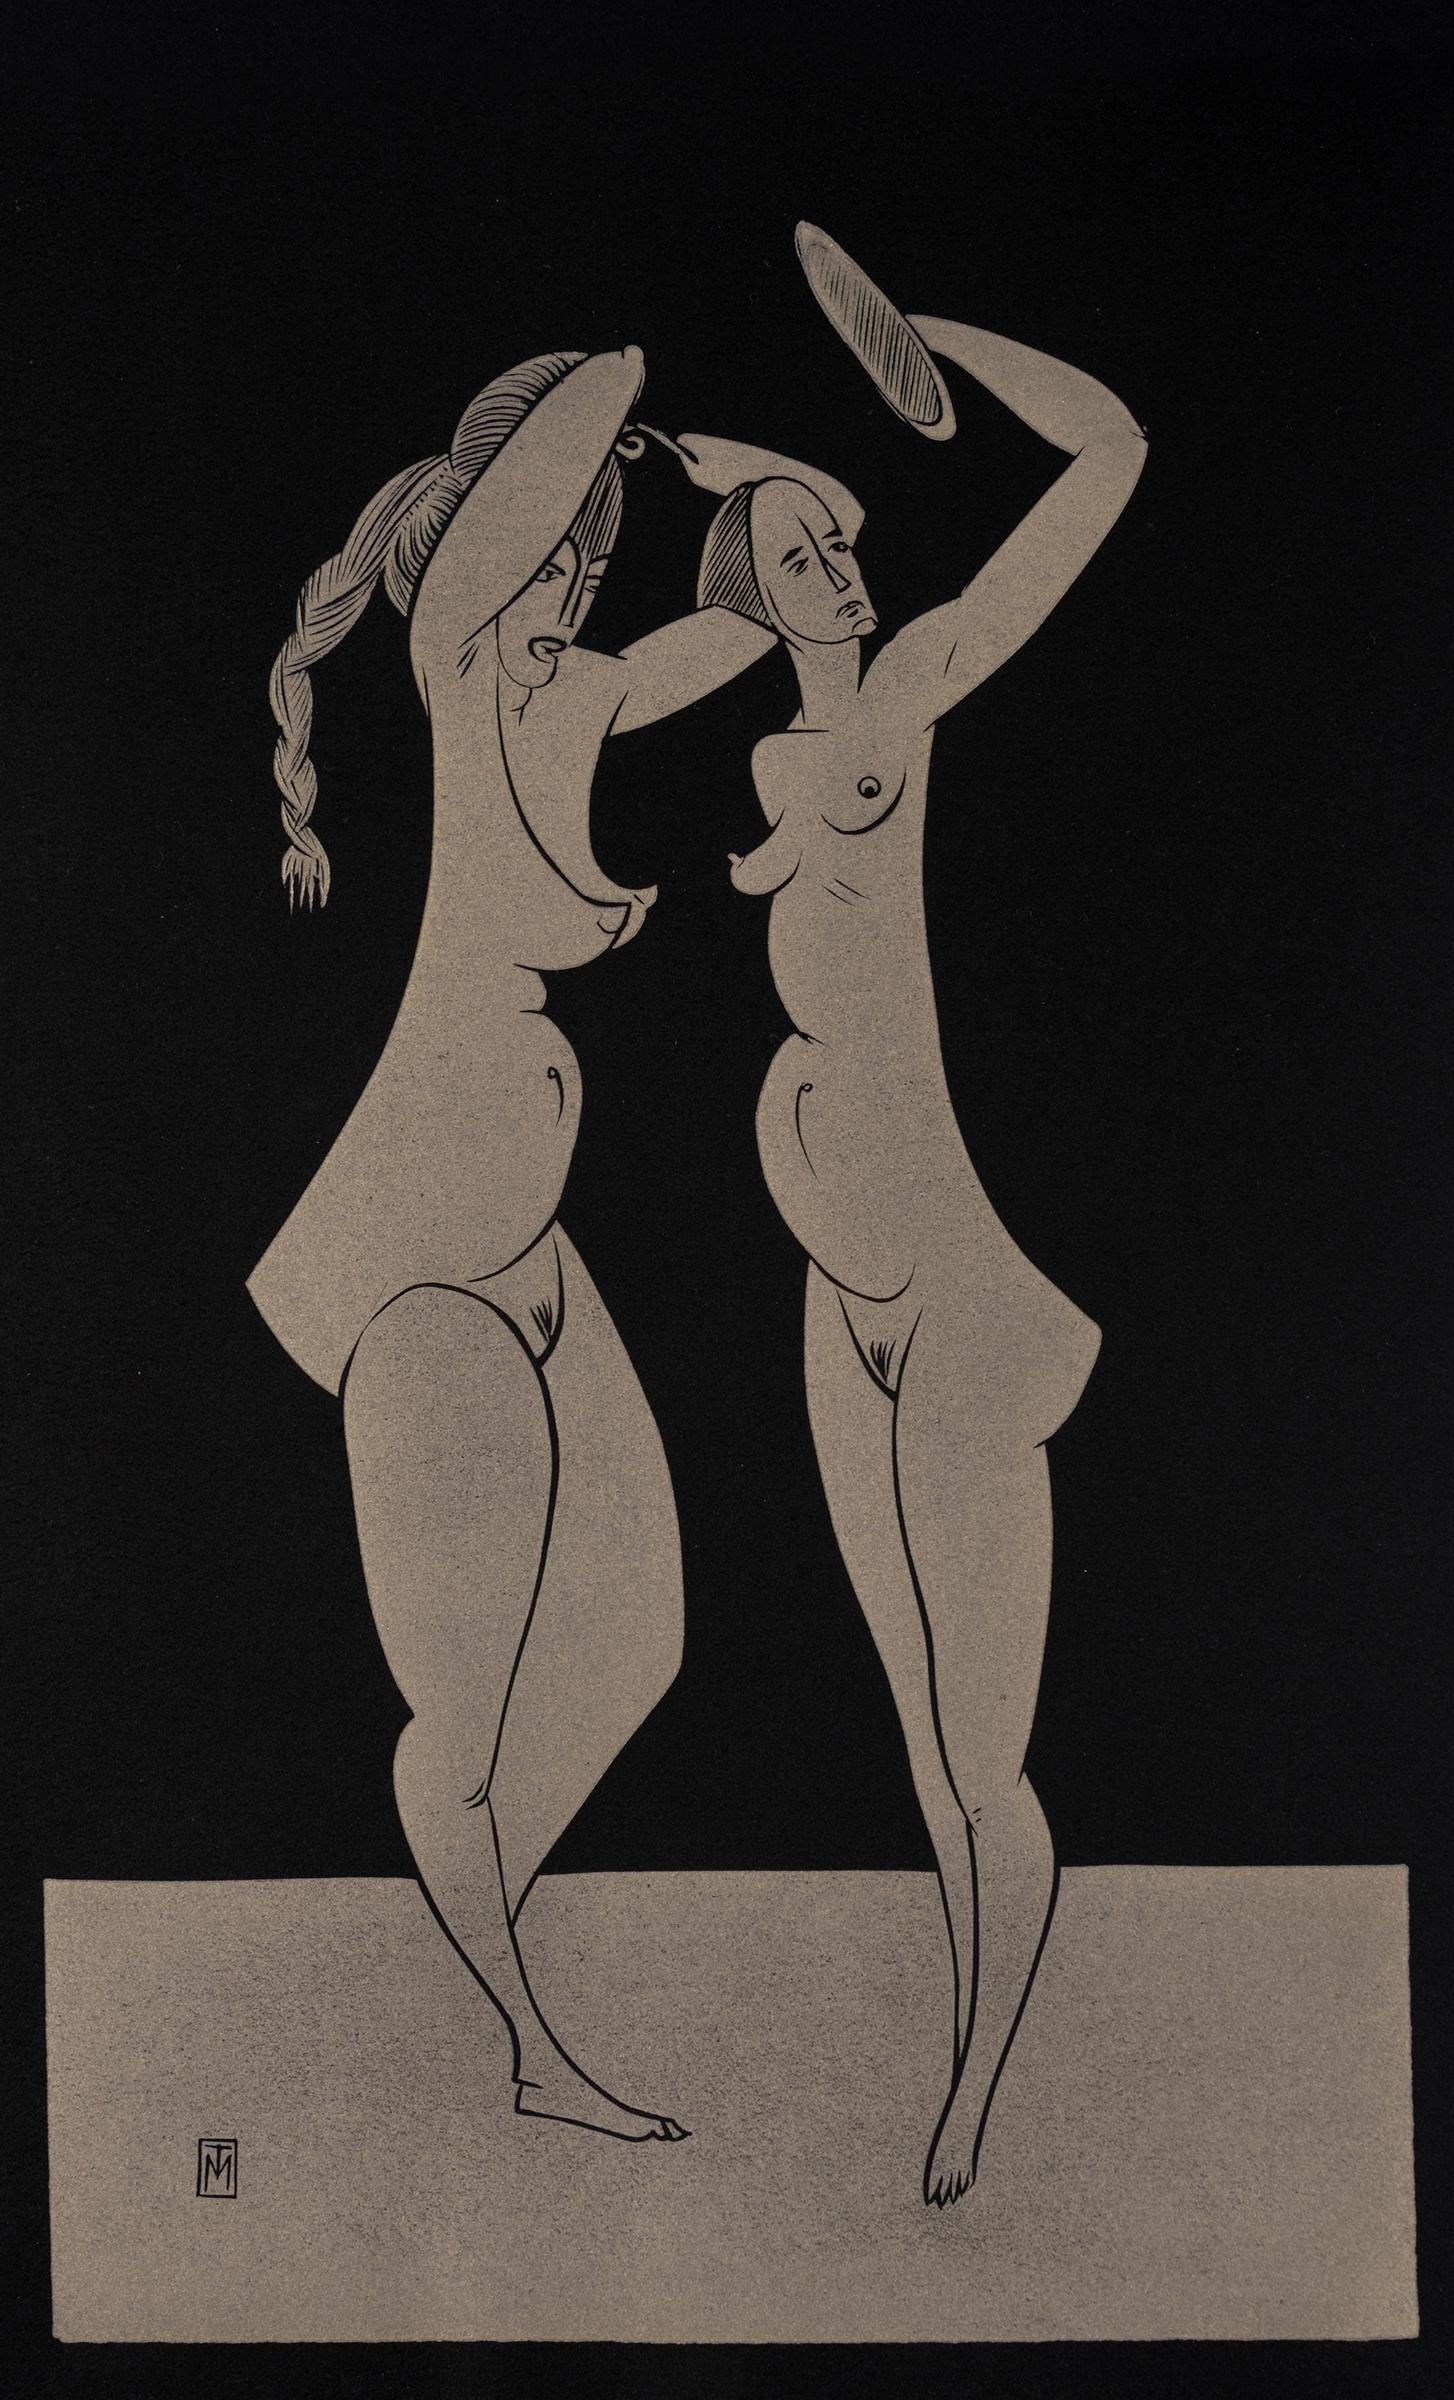 Martyn Tverdun Nude Print - "Contemplation I" - gold block print on black paper